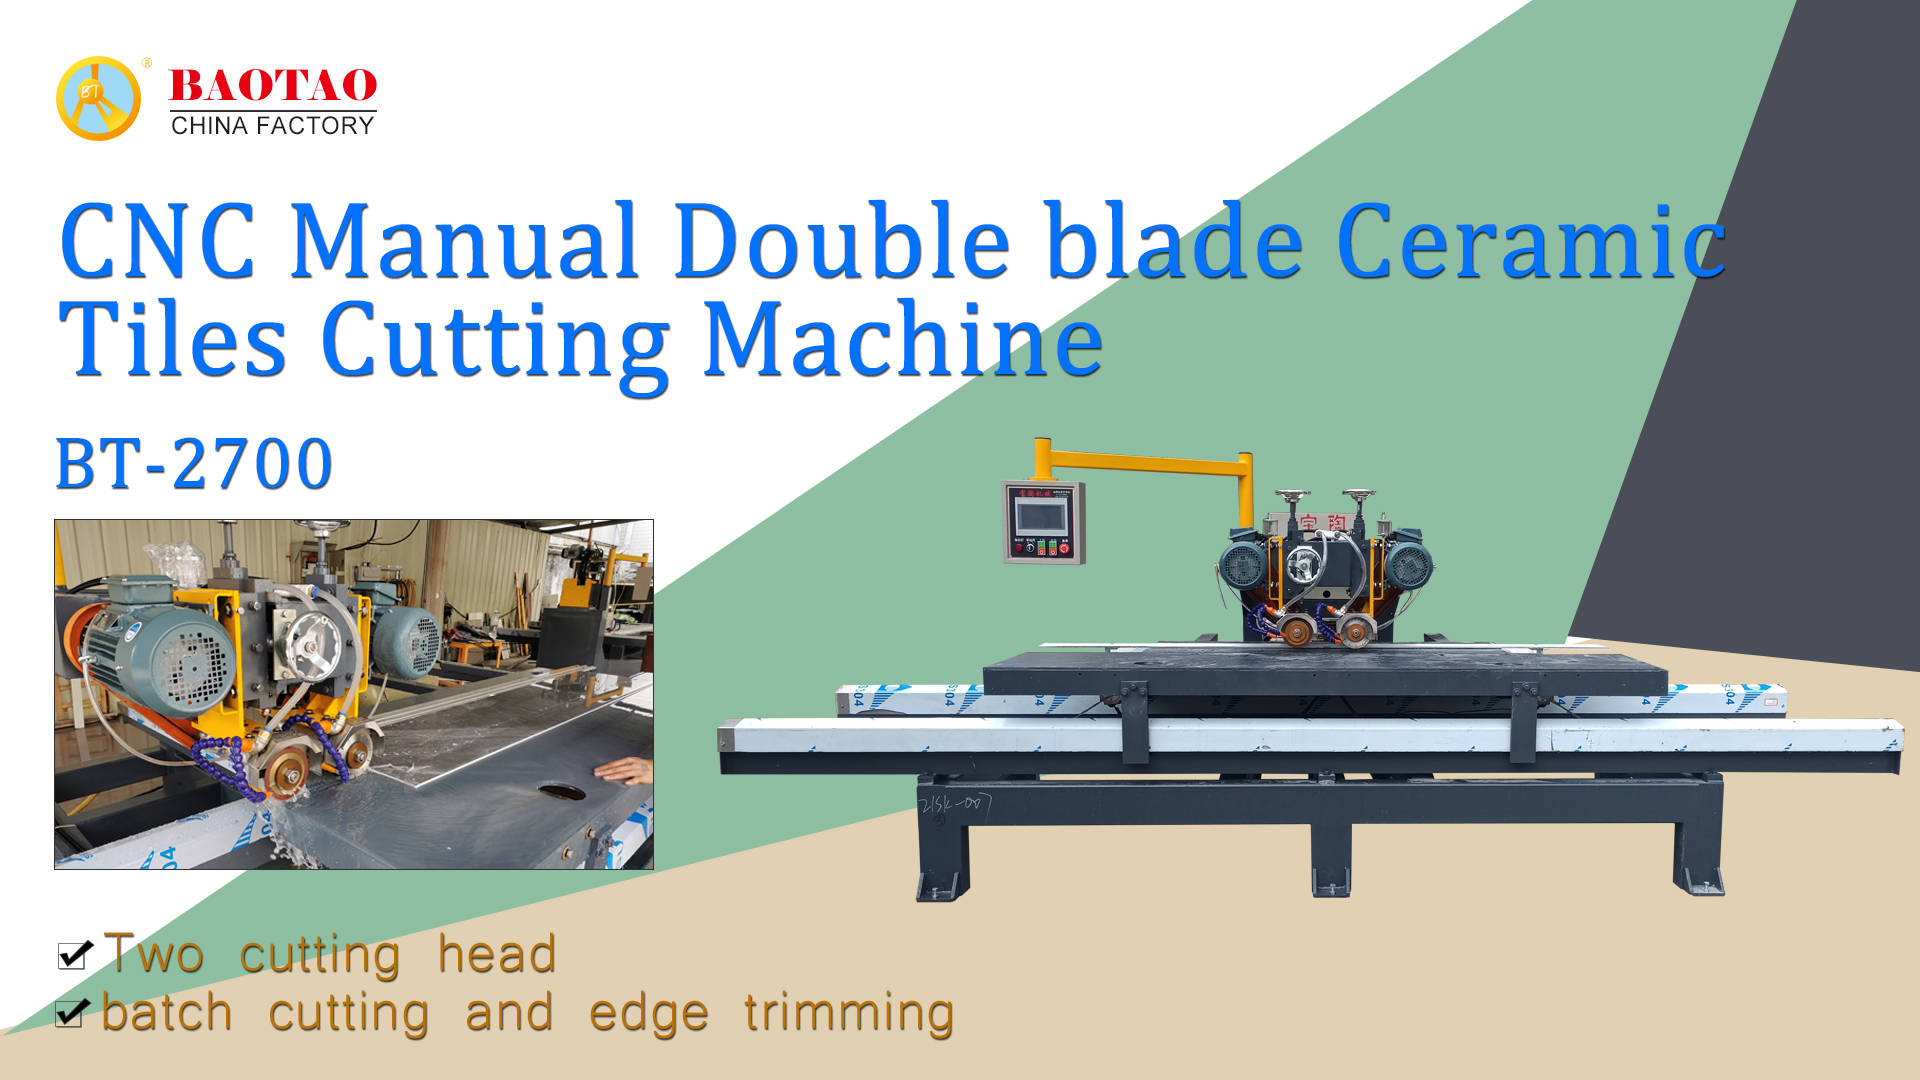 Baotao 2700 Hand push CNC double-blade cutting machine